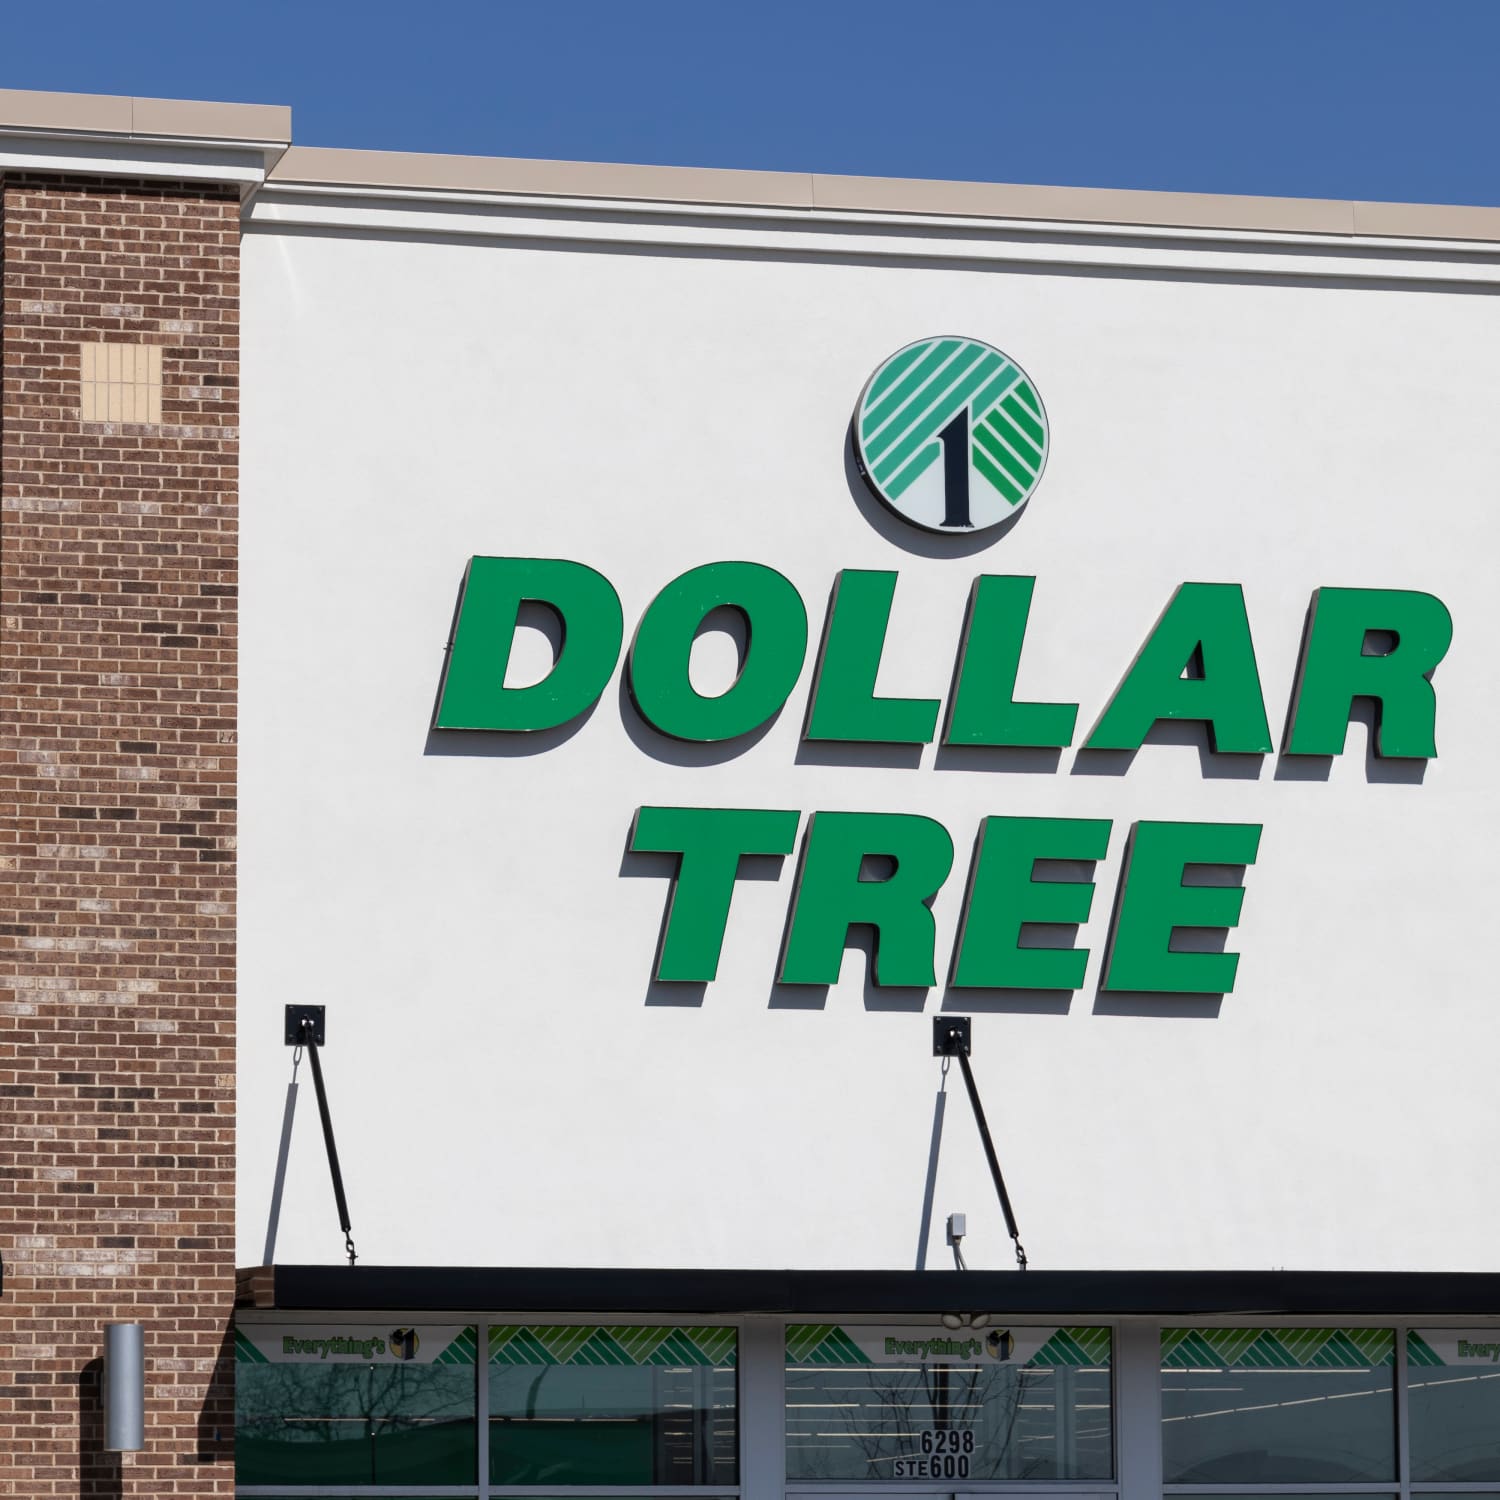 Twelve Dollar Tree deals under $1.25 - including gardening finds